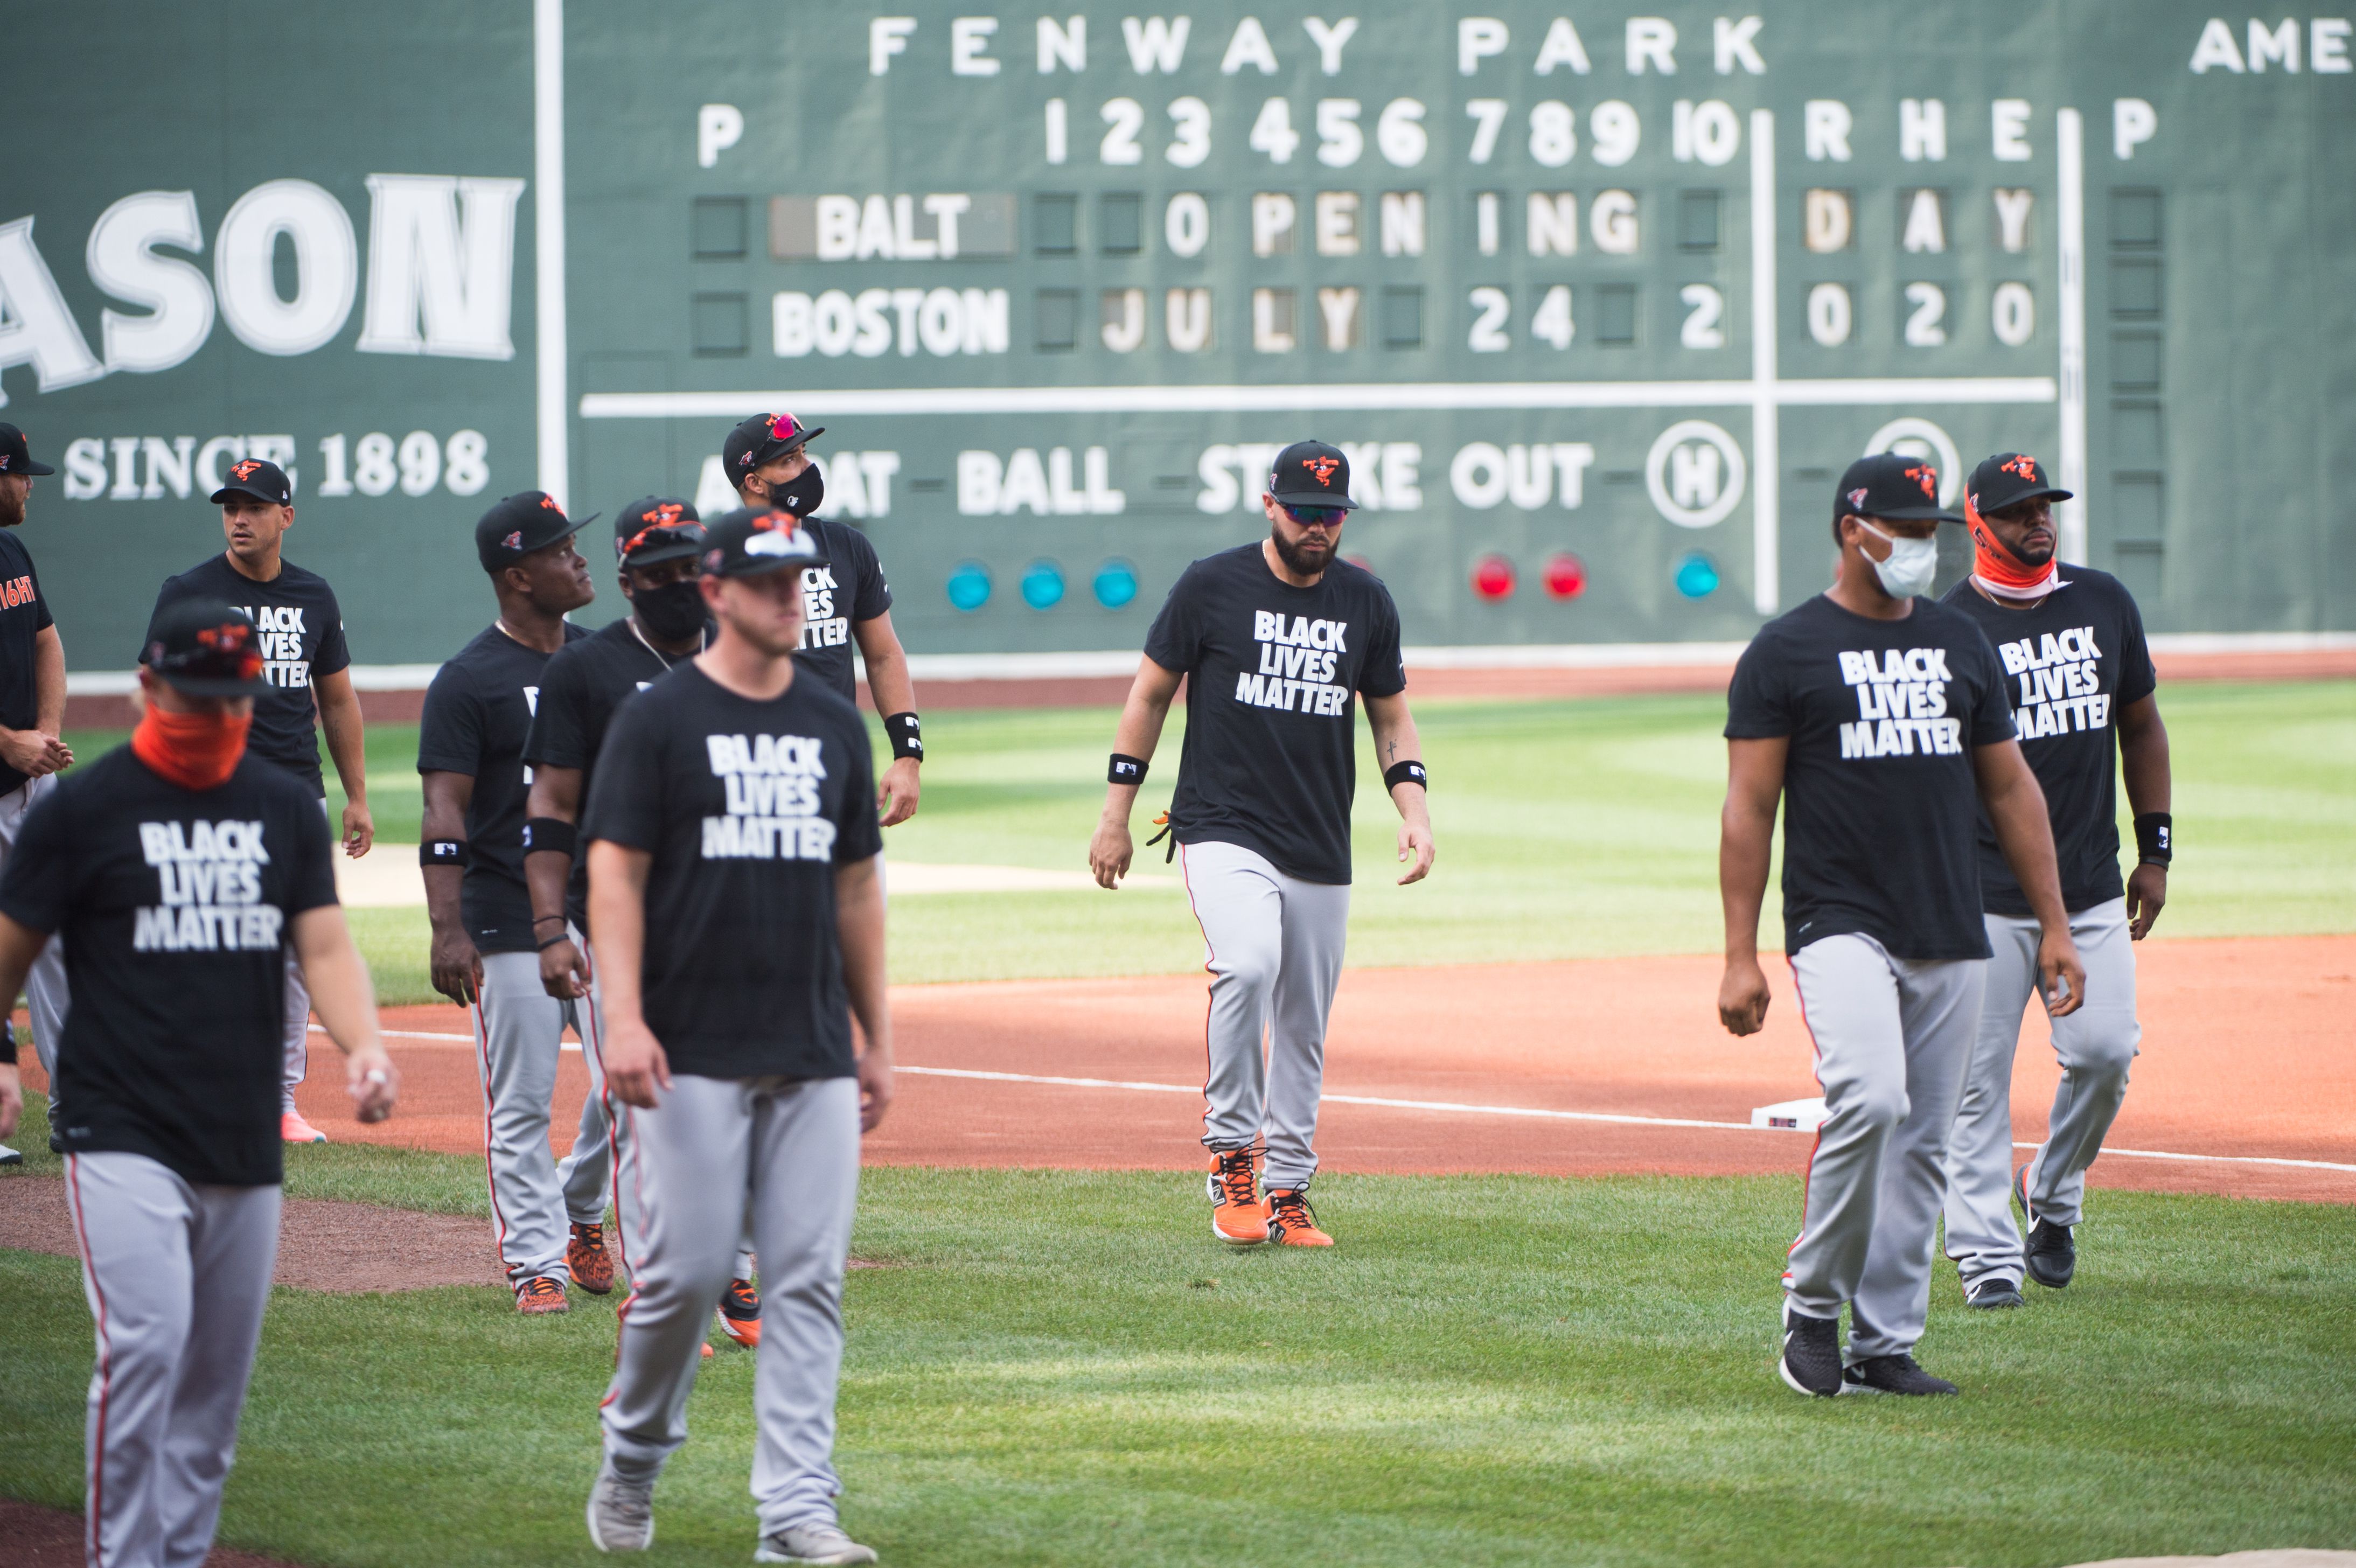 Alex Verdugo: Please Be Fair, Adult T-Shirt / Large - MLB - Sports Fan Gear | breakingt